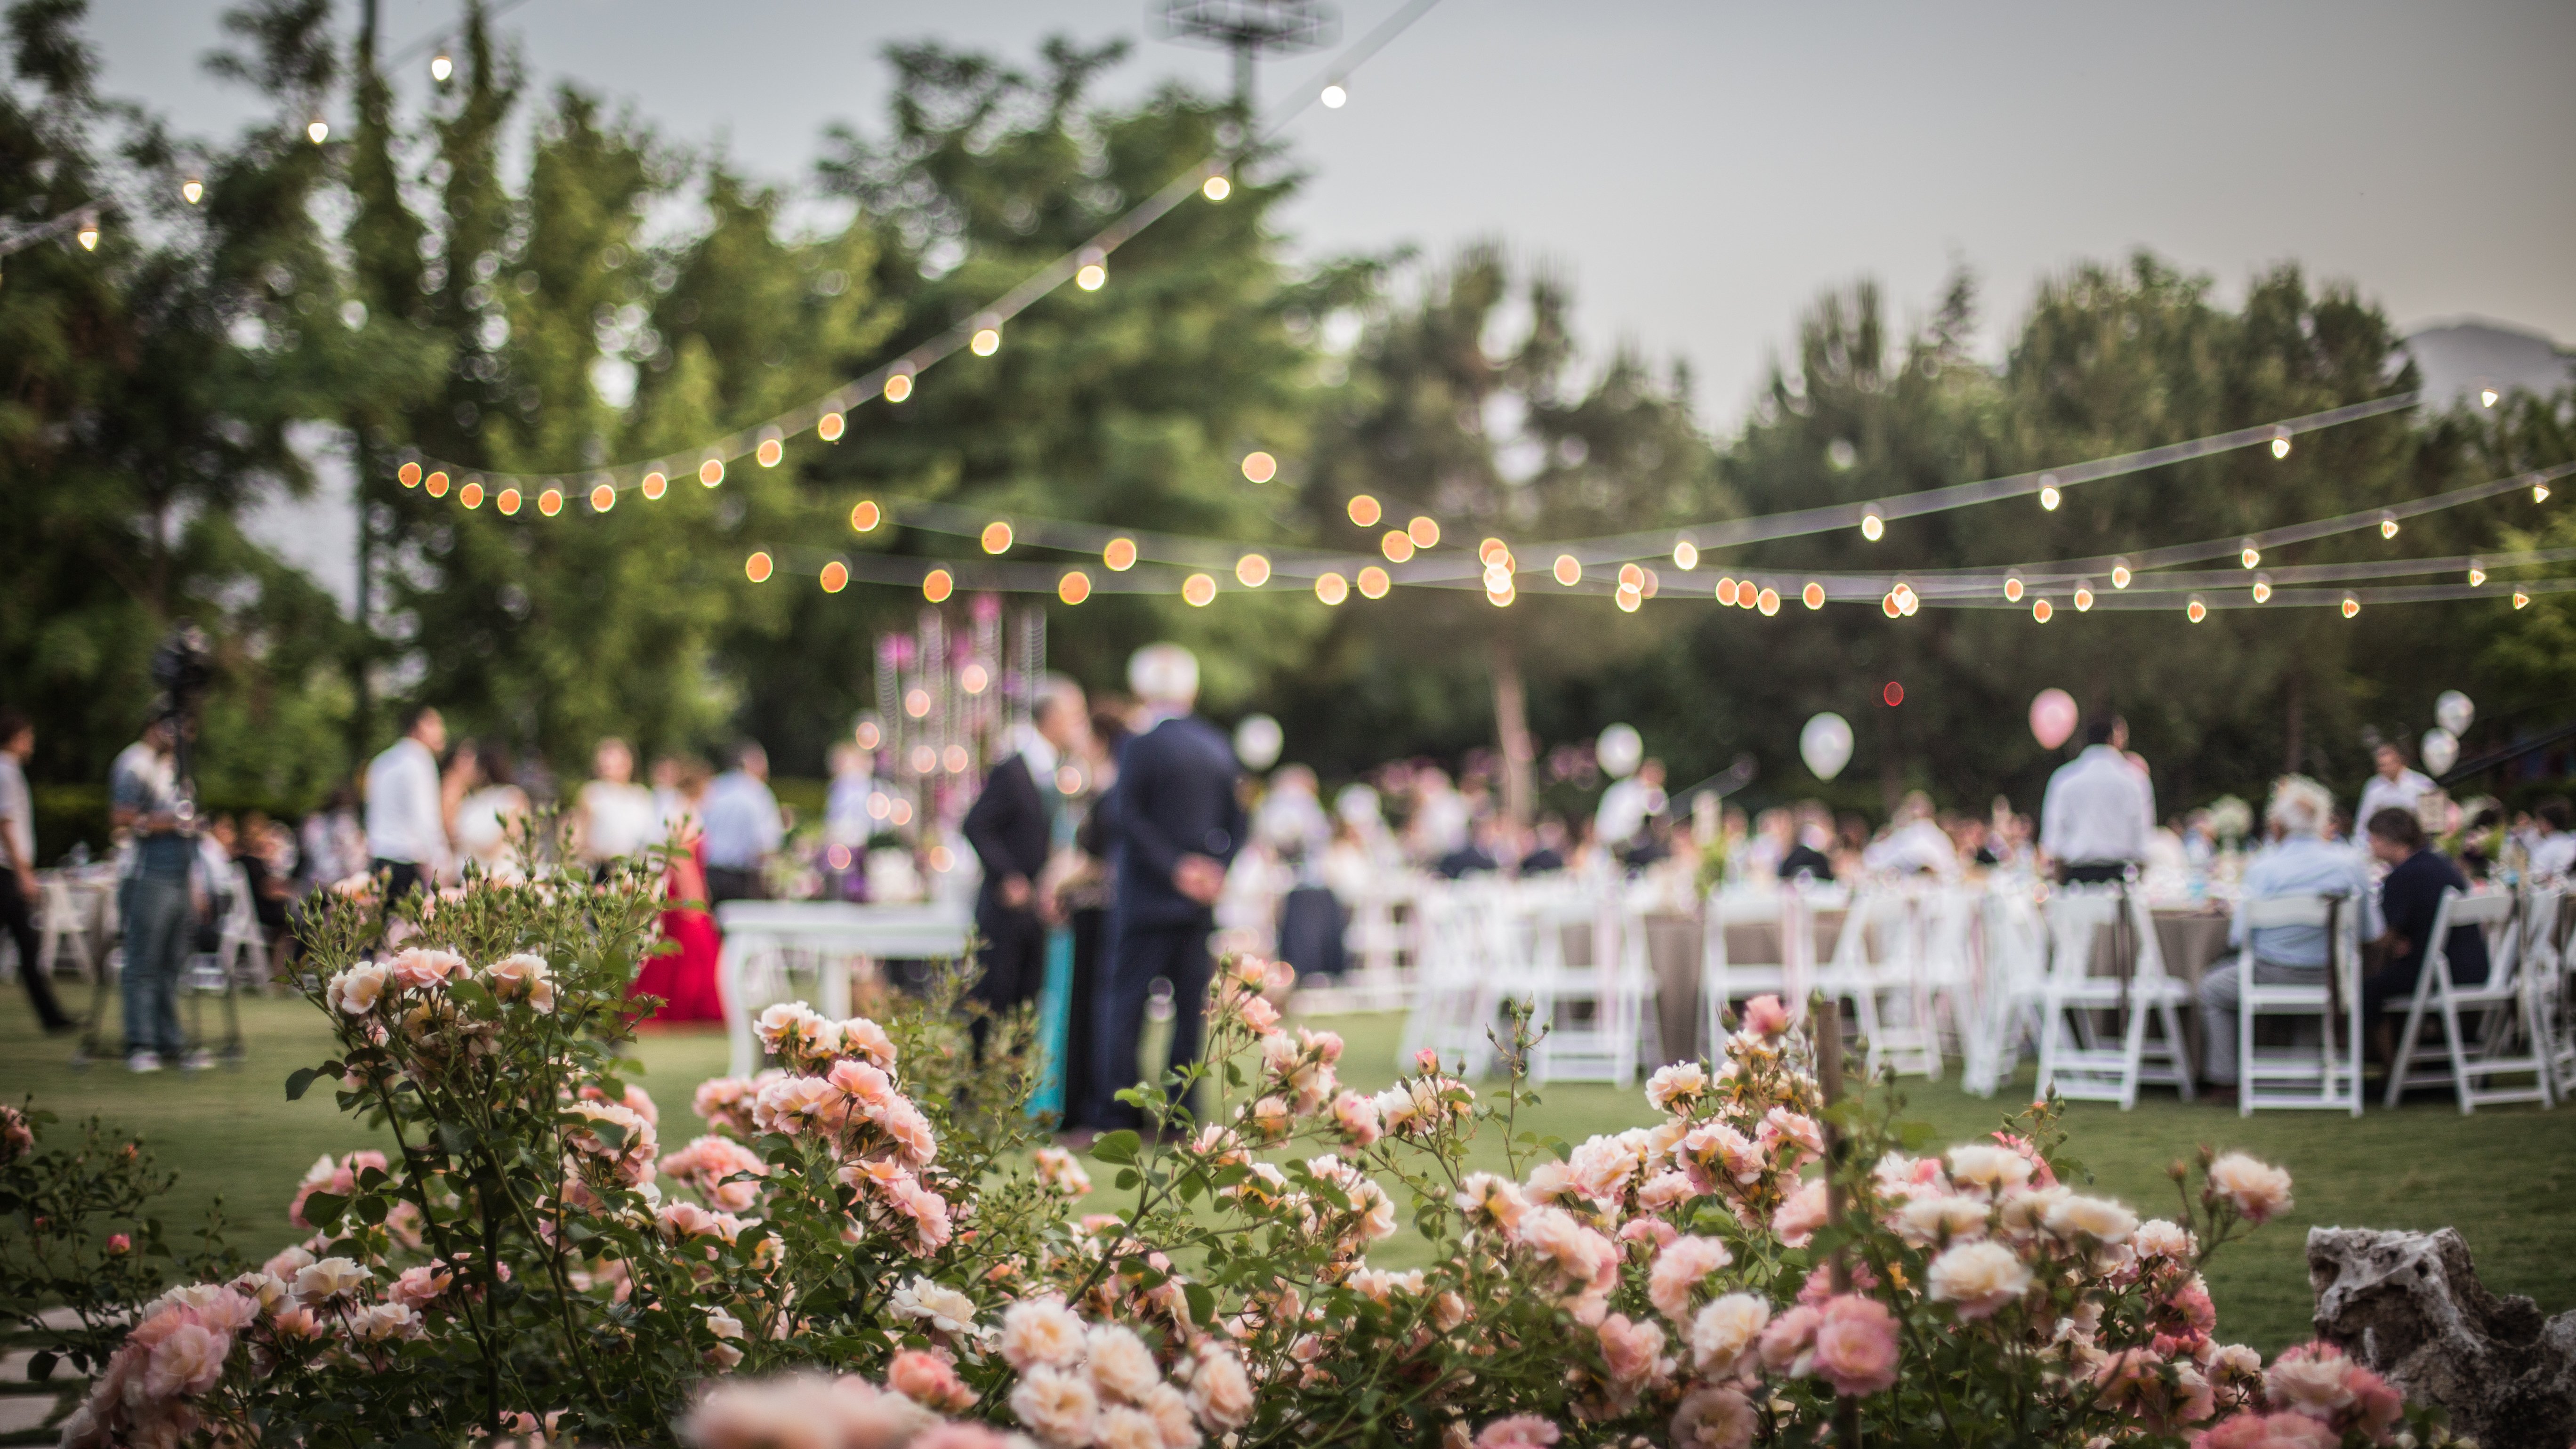 Hermosa ceremonia de bodas. | Foto: Shutterstock